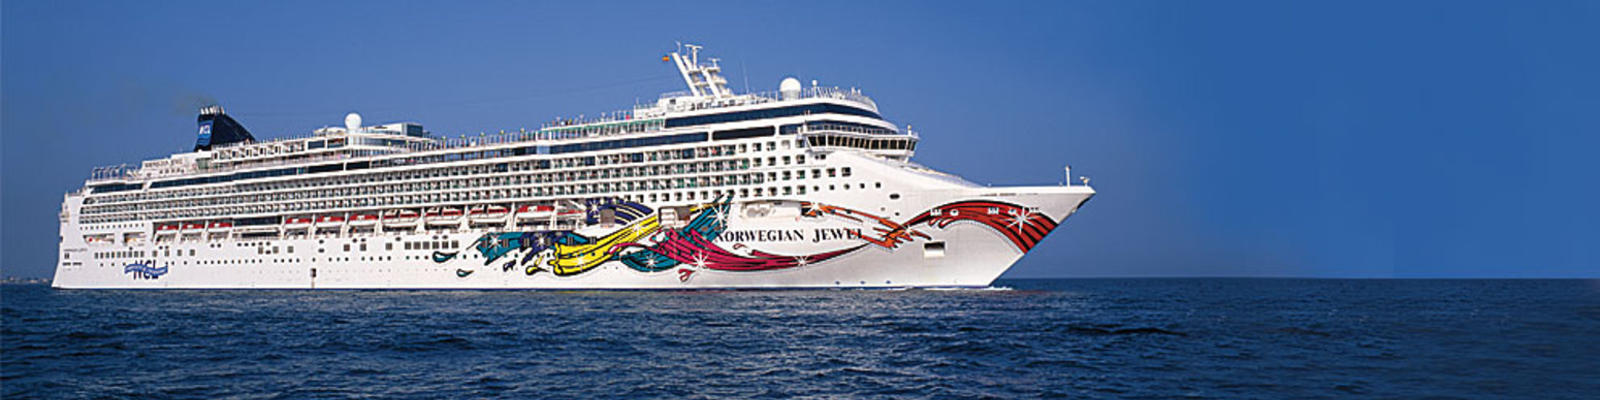 The Norwegian Jewel cruise ship at sea.